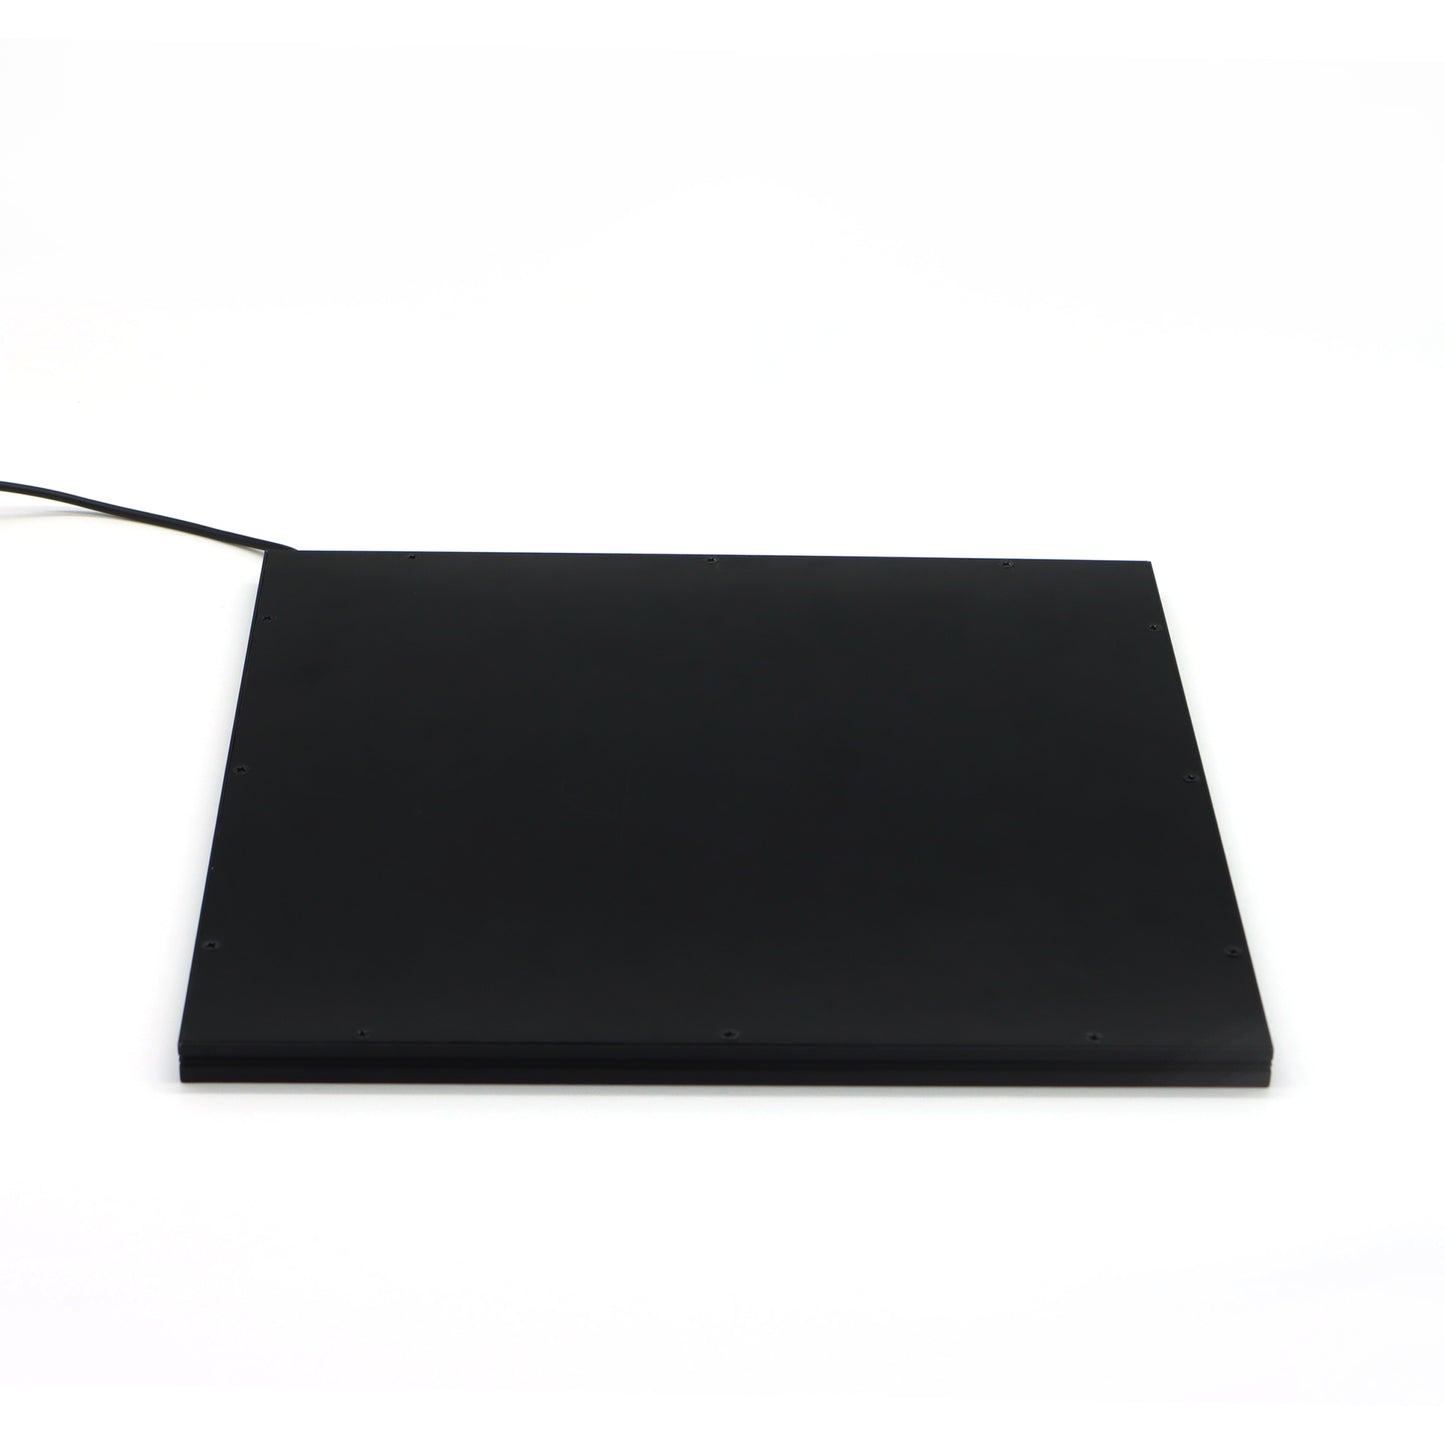 Reflx Lab Slide Viewer Light Pad, 30cm x 30cm, Free-shipping